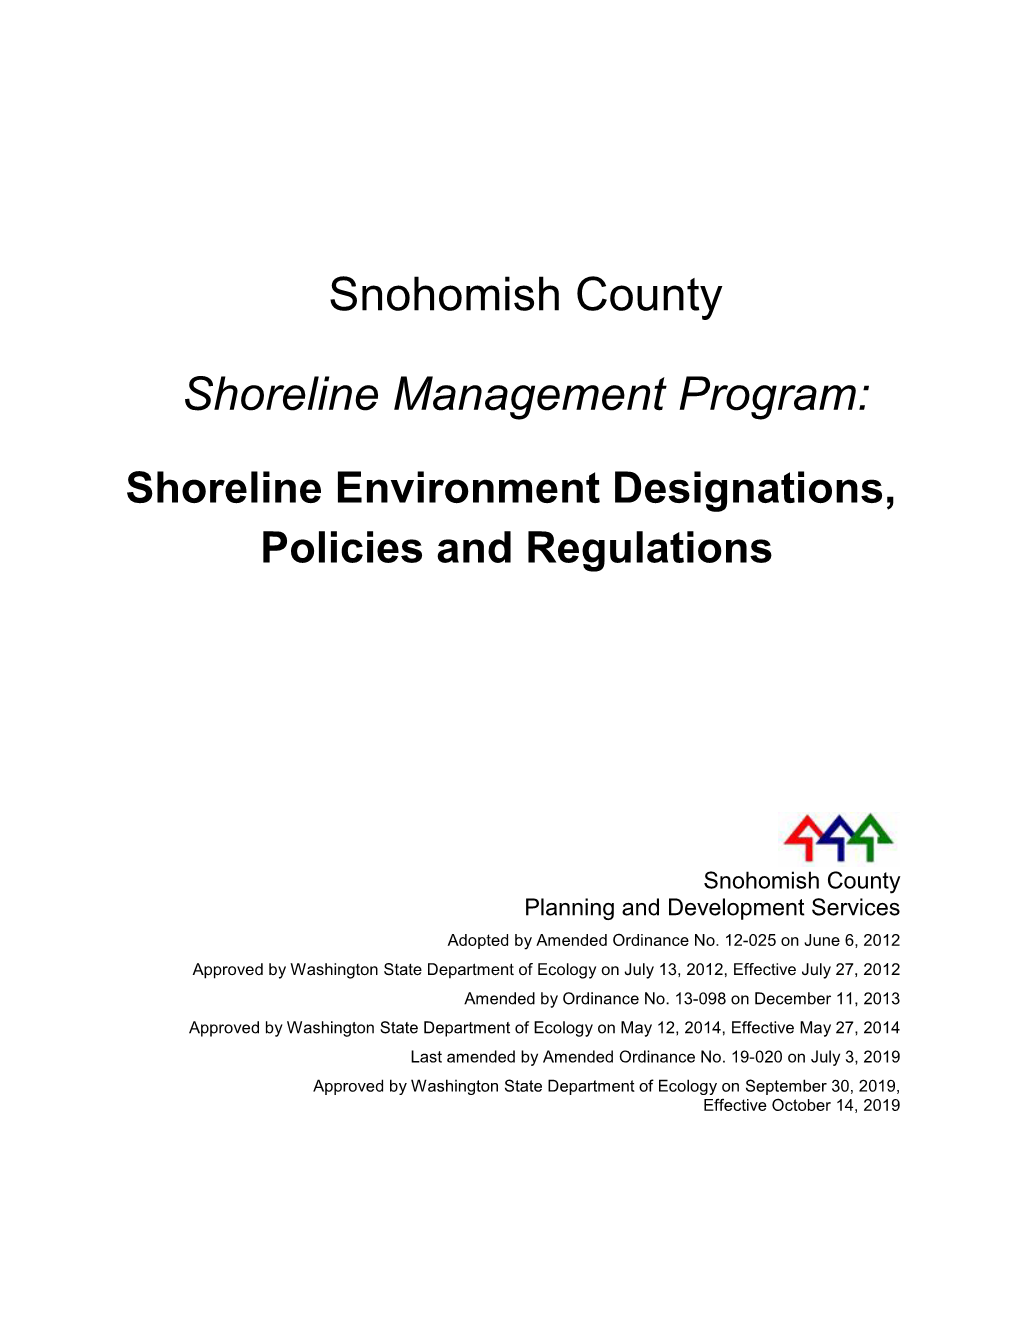 Snohomish County Shoreline Management Program: Shoreline Environment Designations, Policies and Regulations 3.2.5.3 Boating and Boat Mooring Facilities